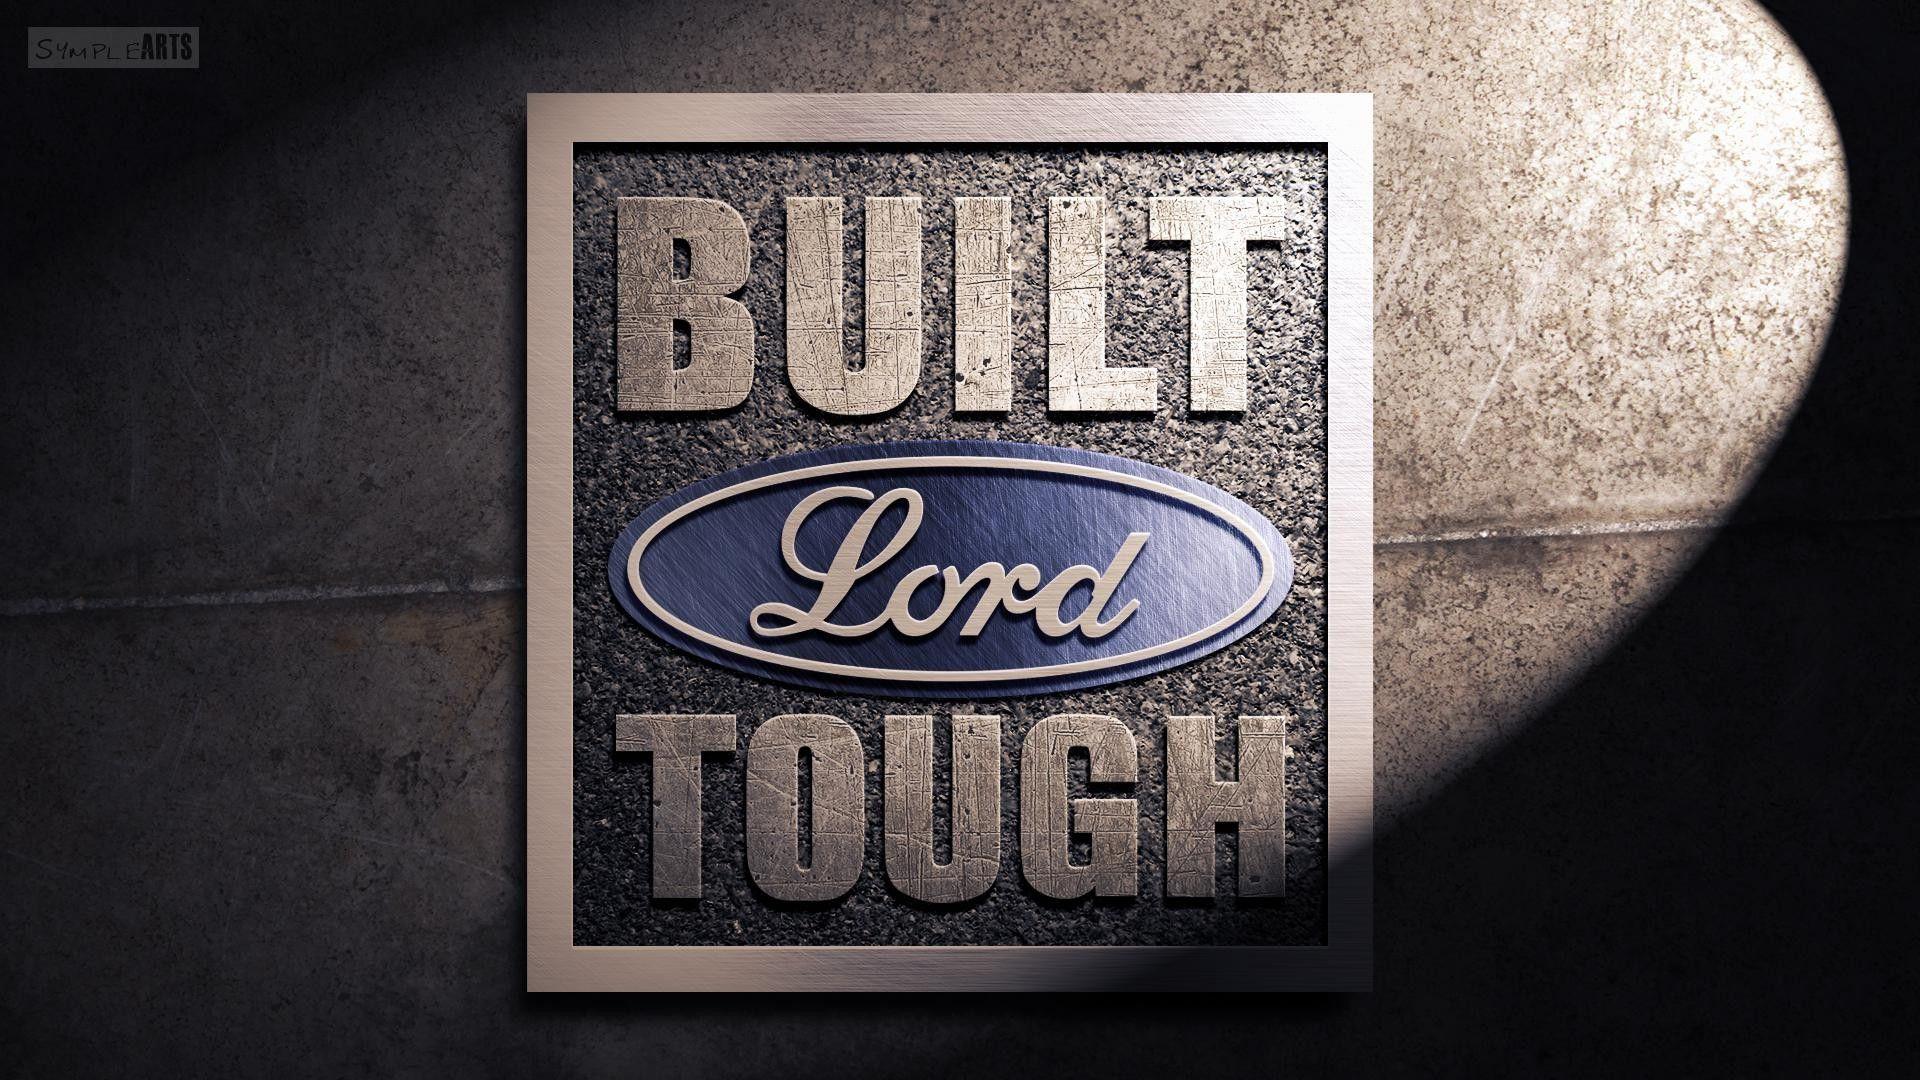 Cool Ford Logo Wallpaper